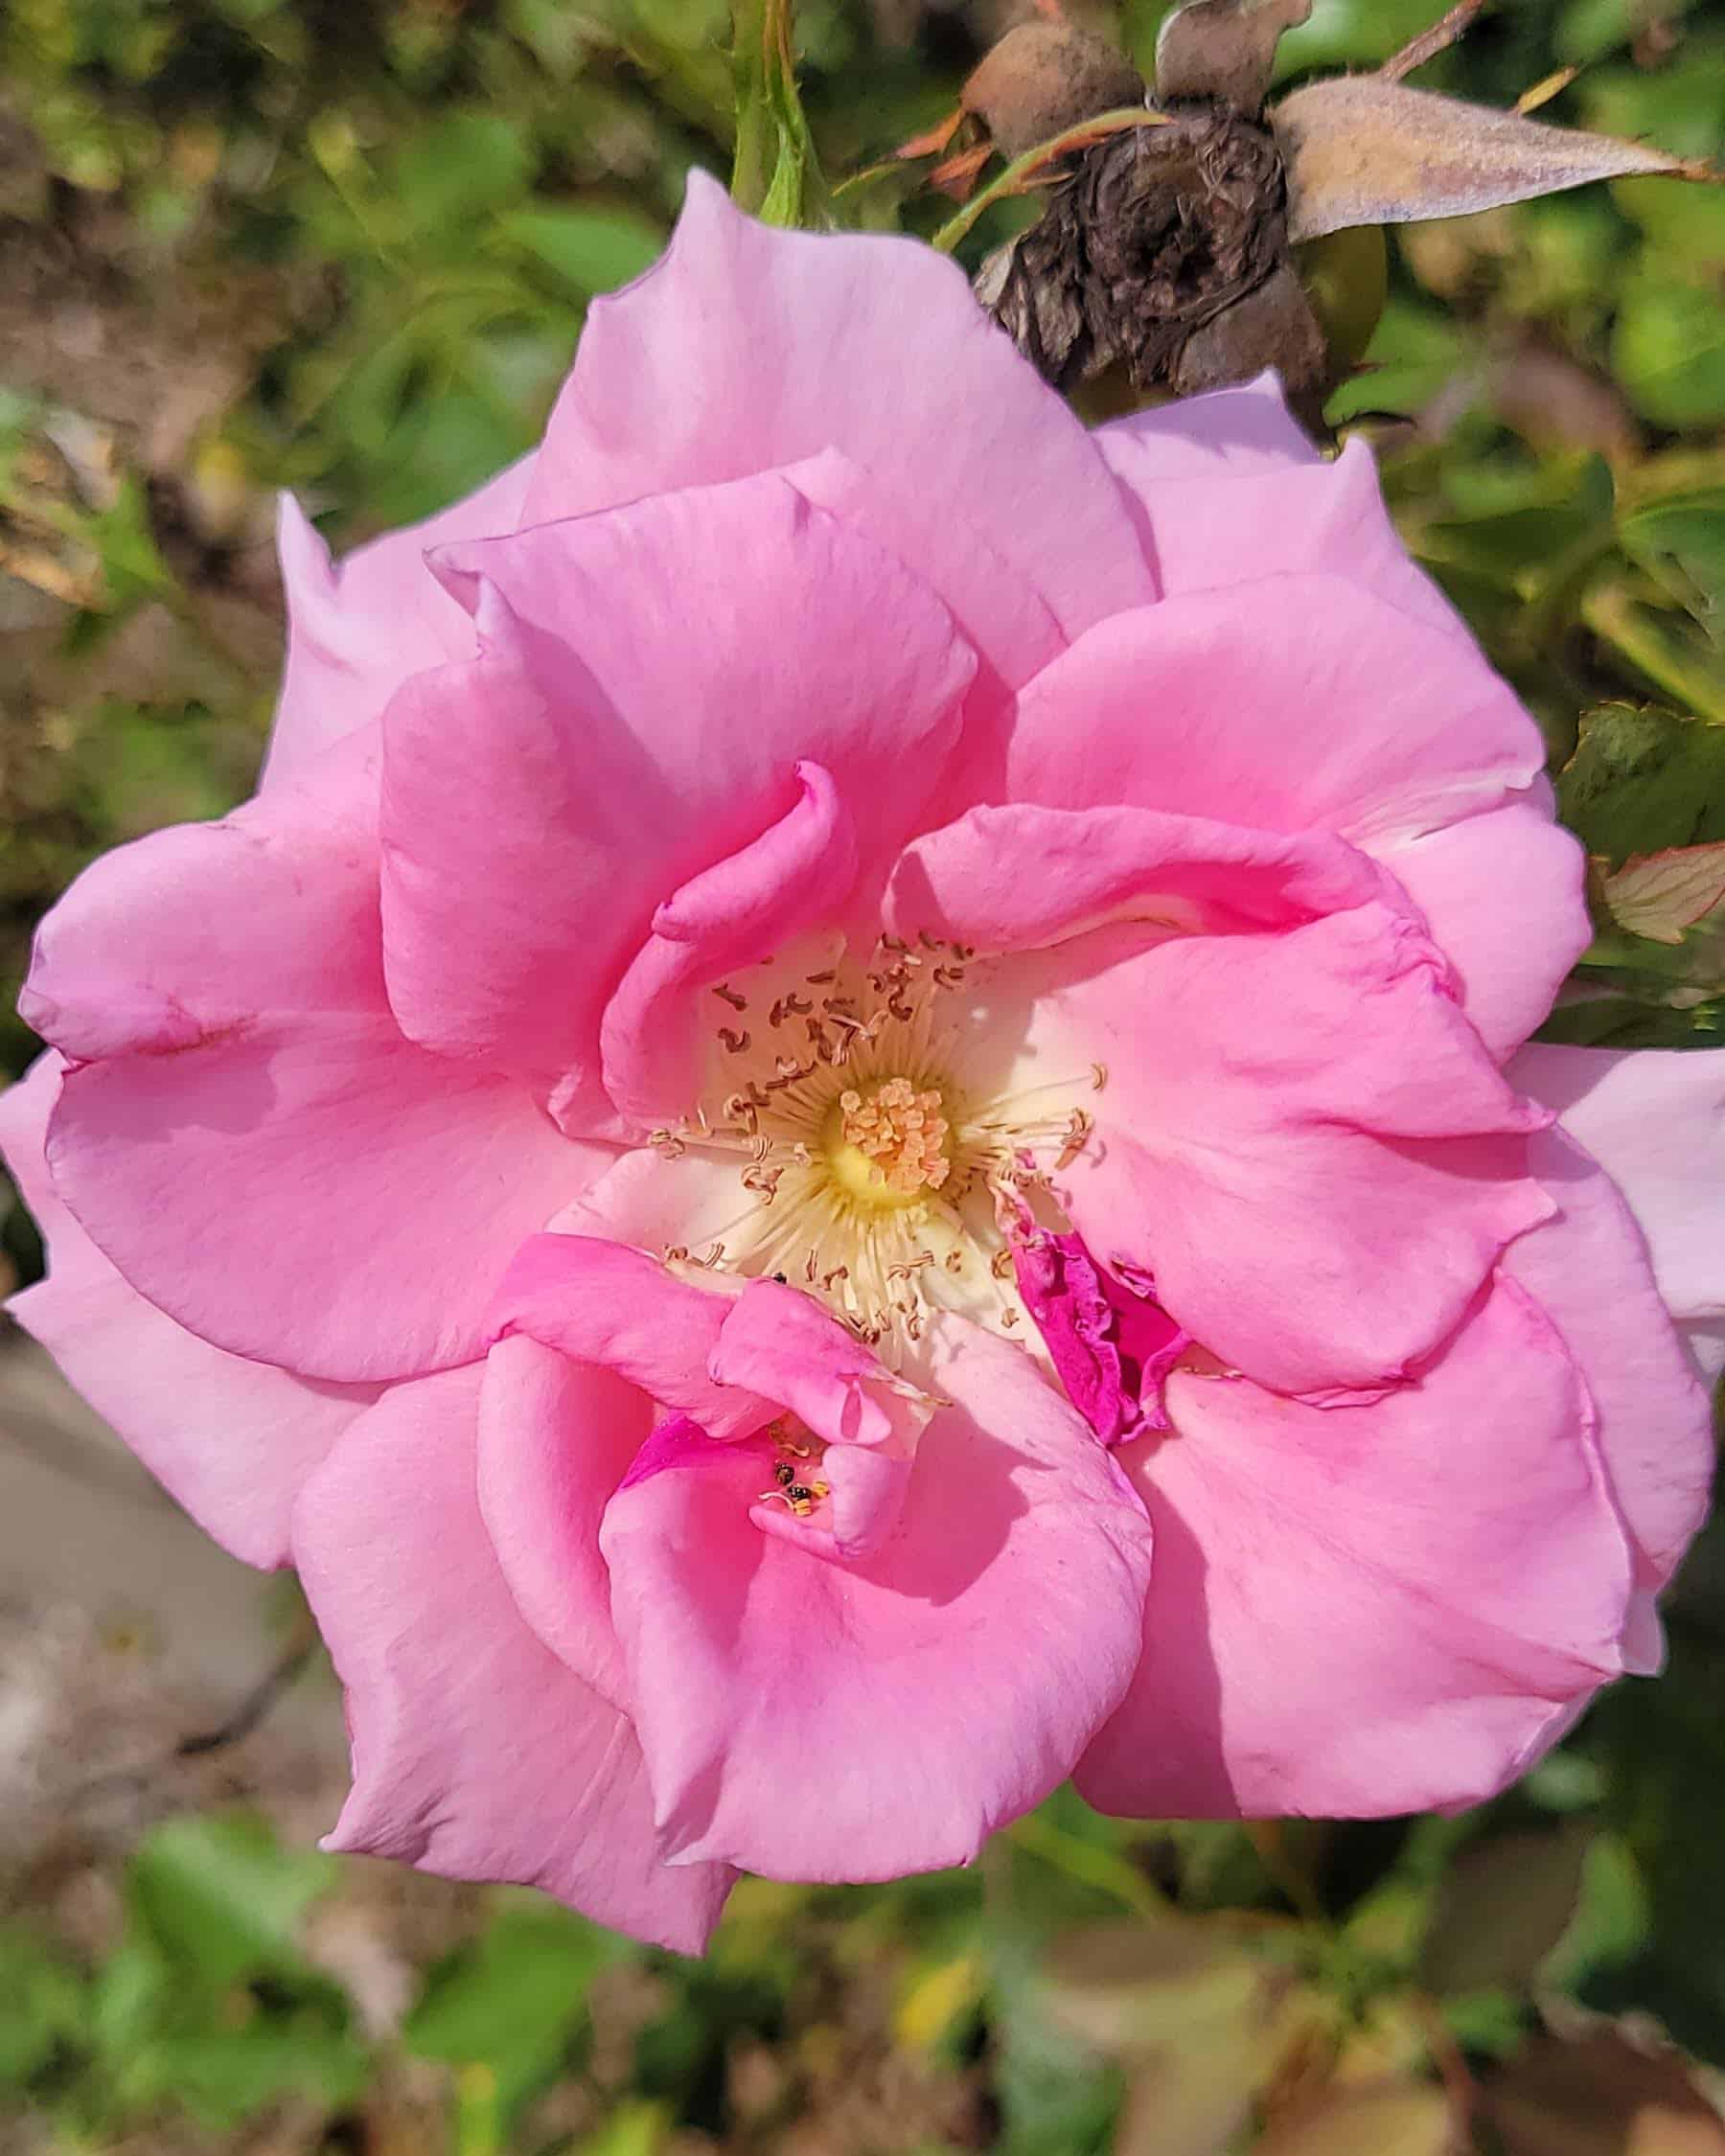 Carefree beauty rose